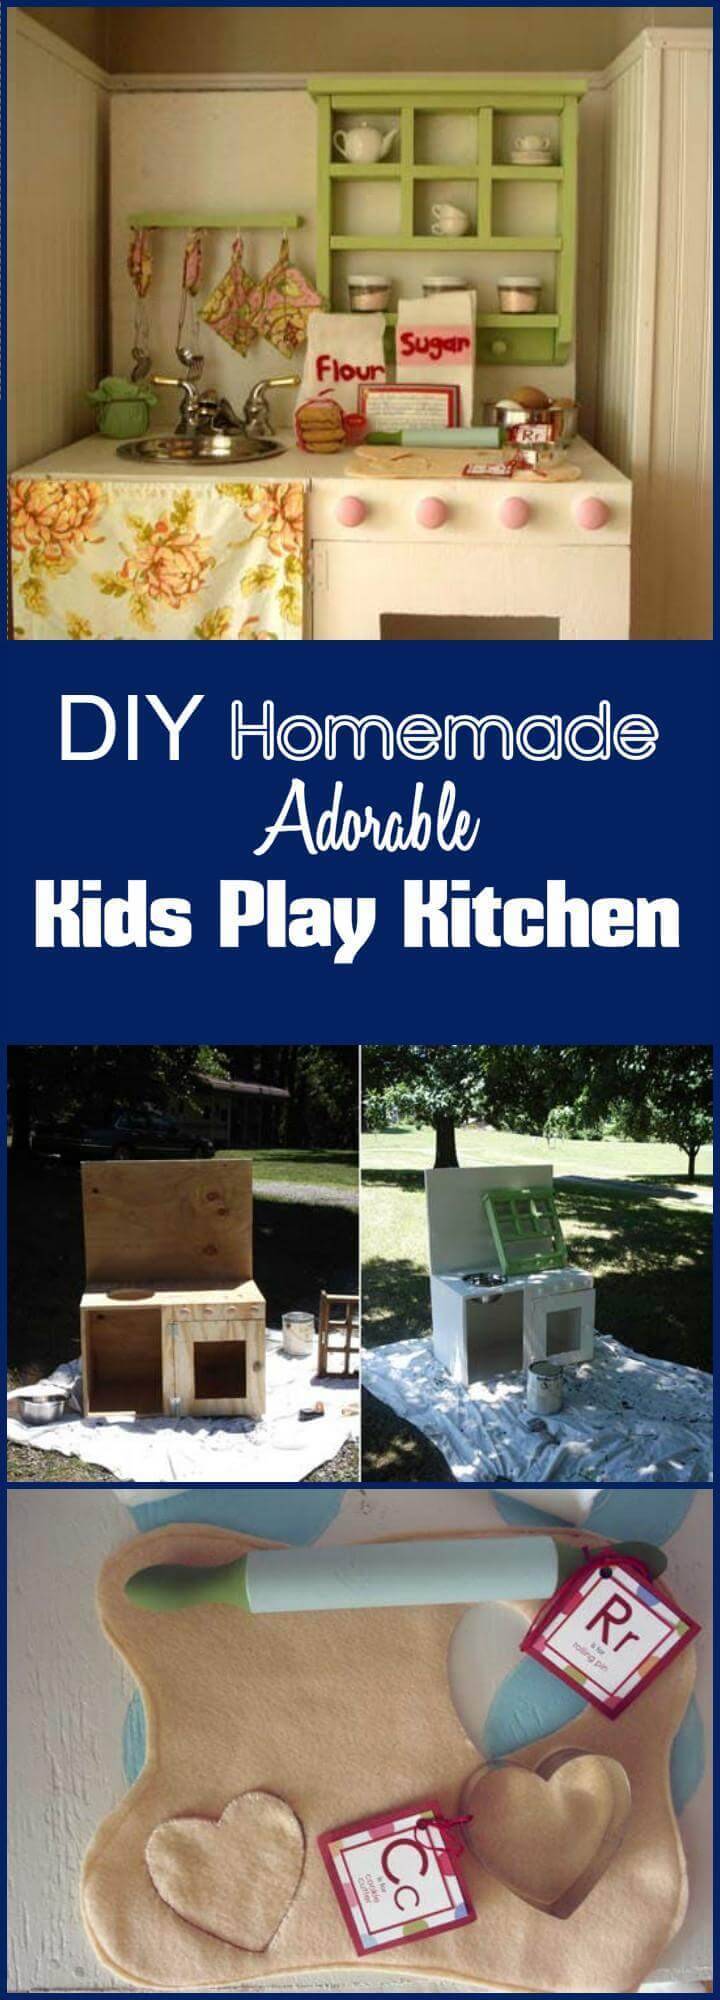 DIY handmade adorable kids play kitchen